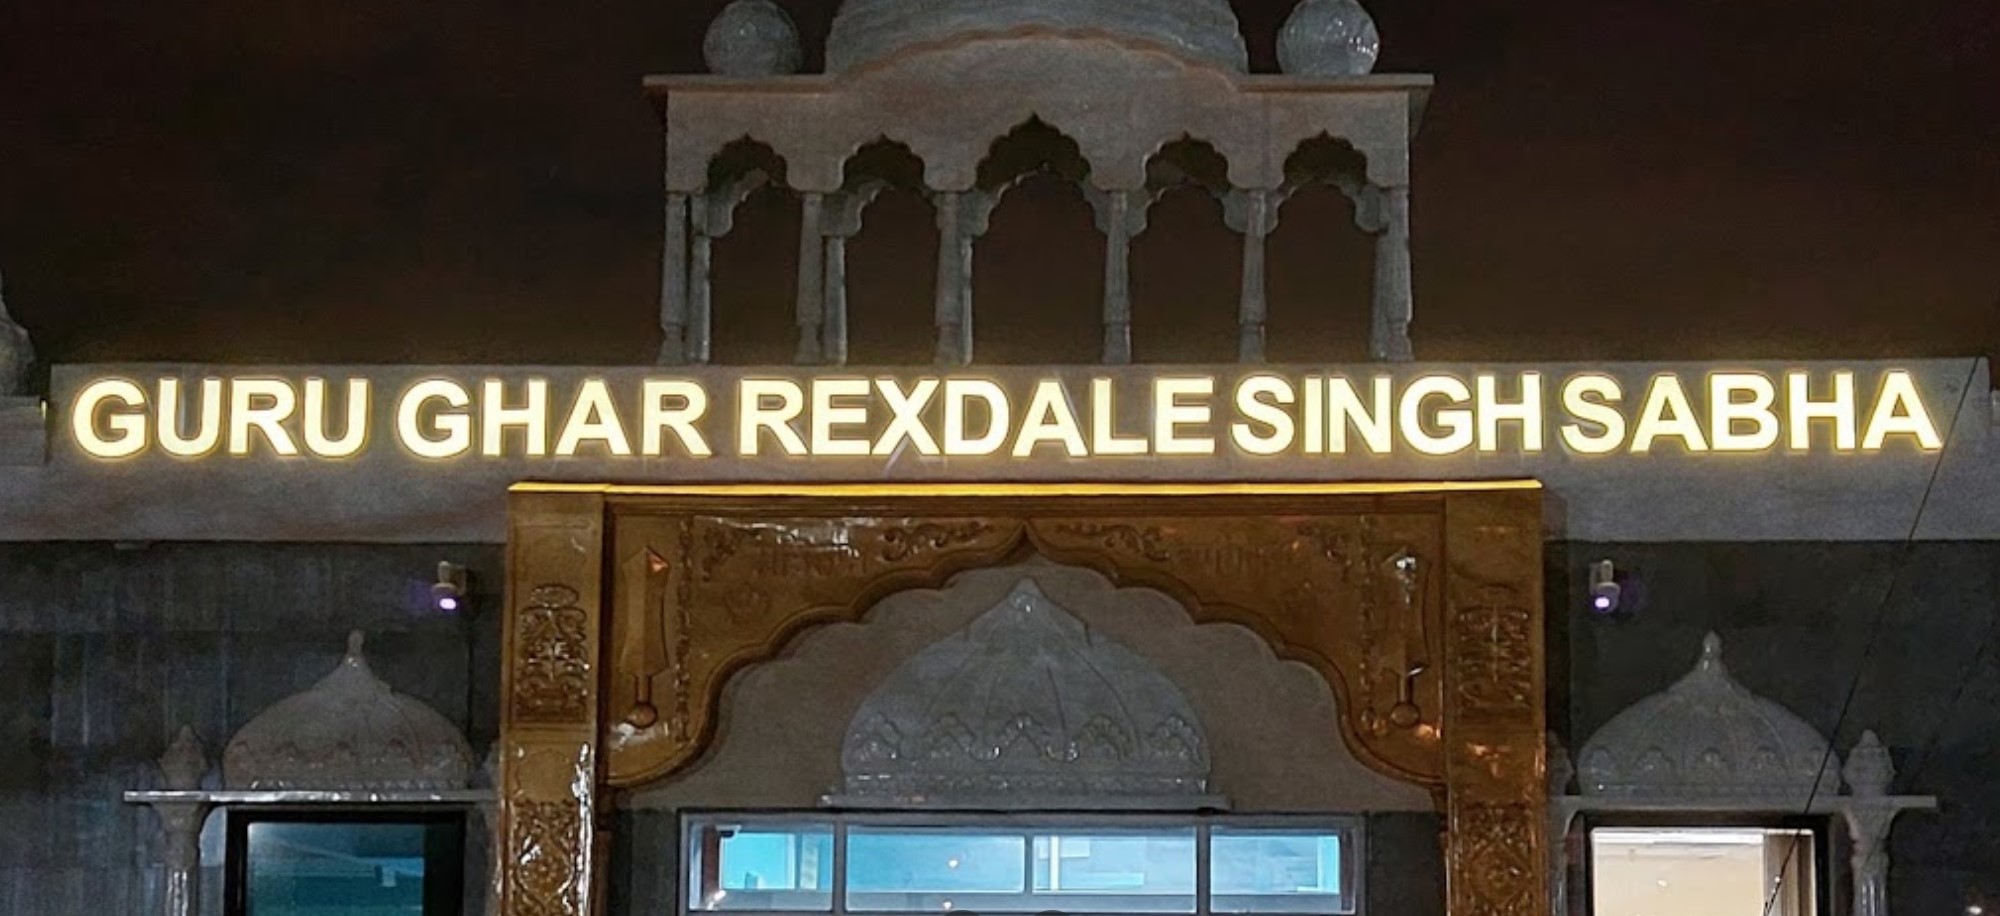 Rexdale Singh Sabha Religious Centre